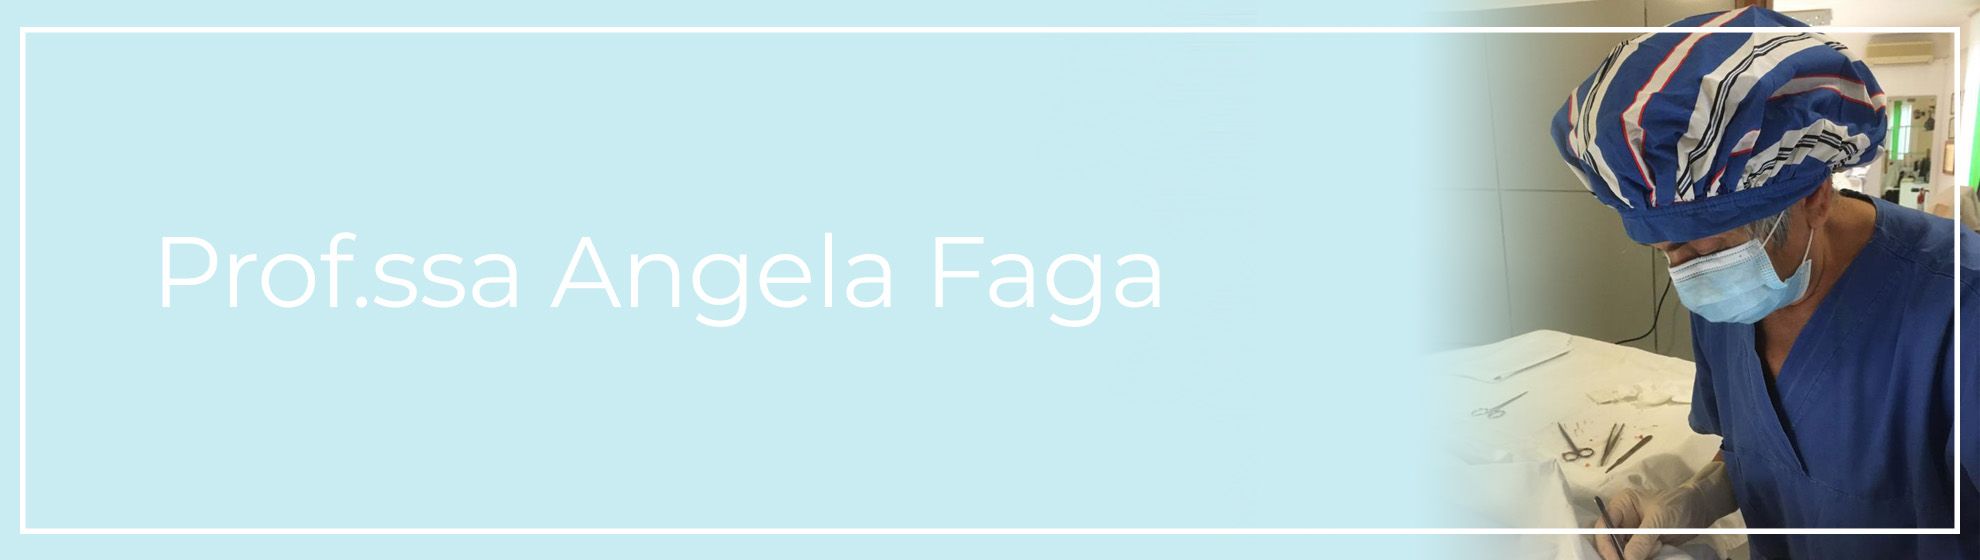 Prof.ssa Angela Faga